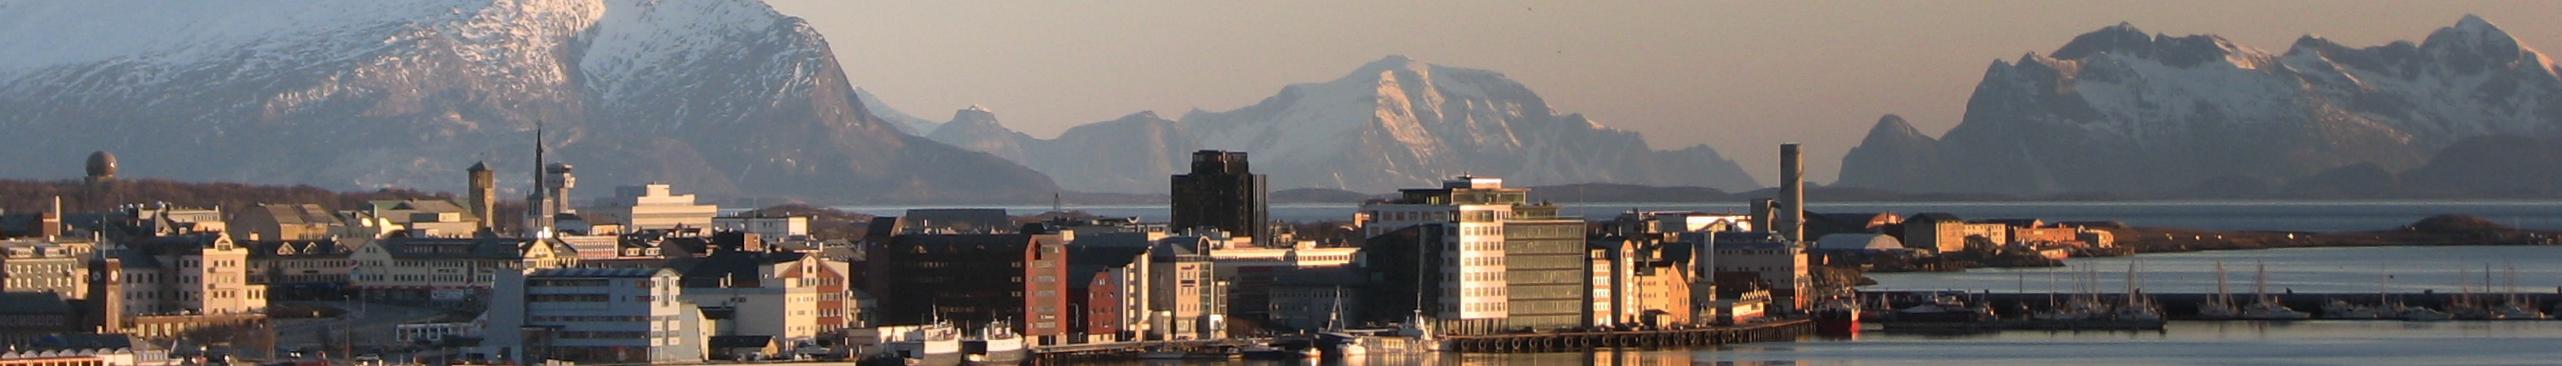 Banner image for Bodø on GigsGuide